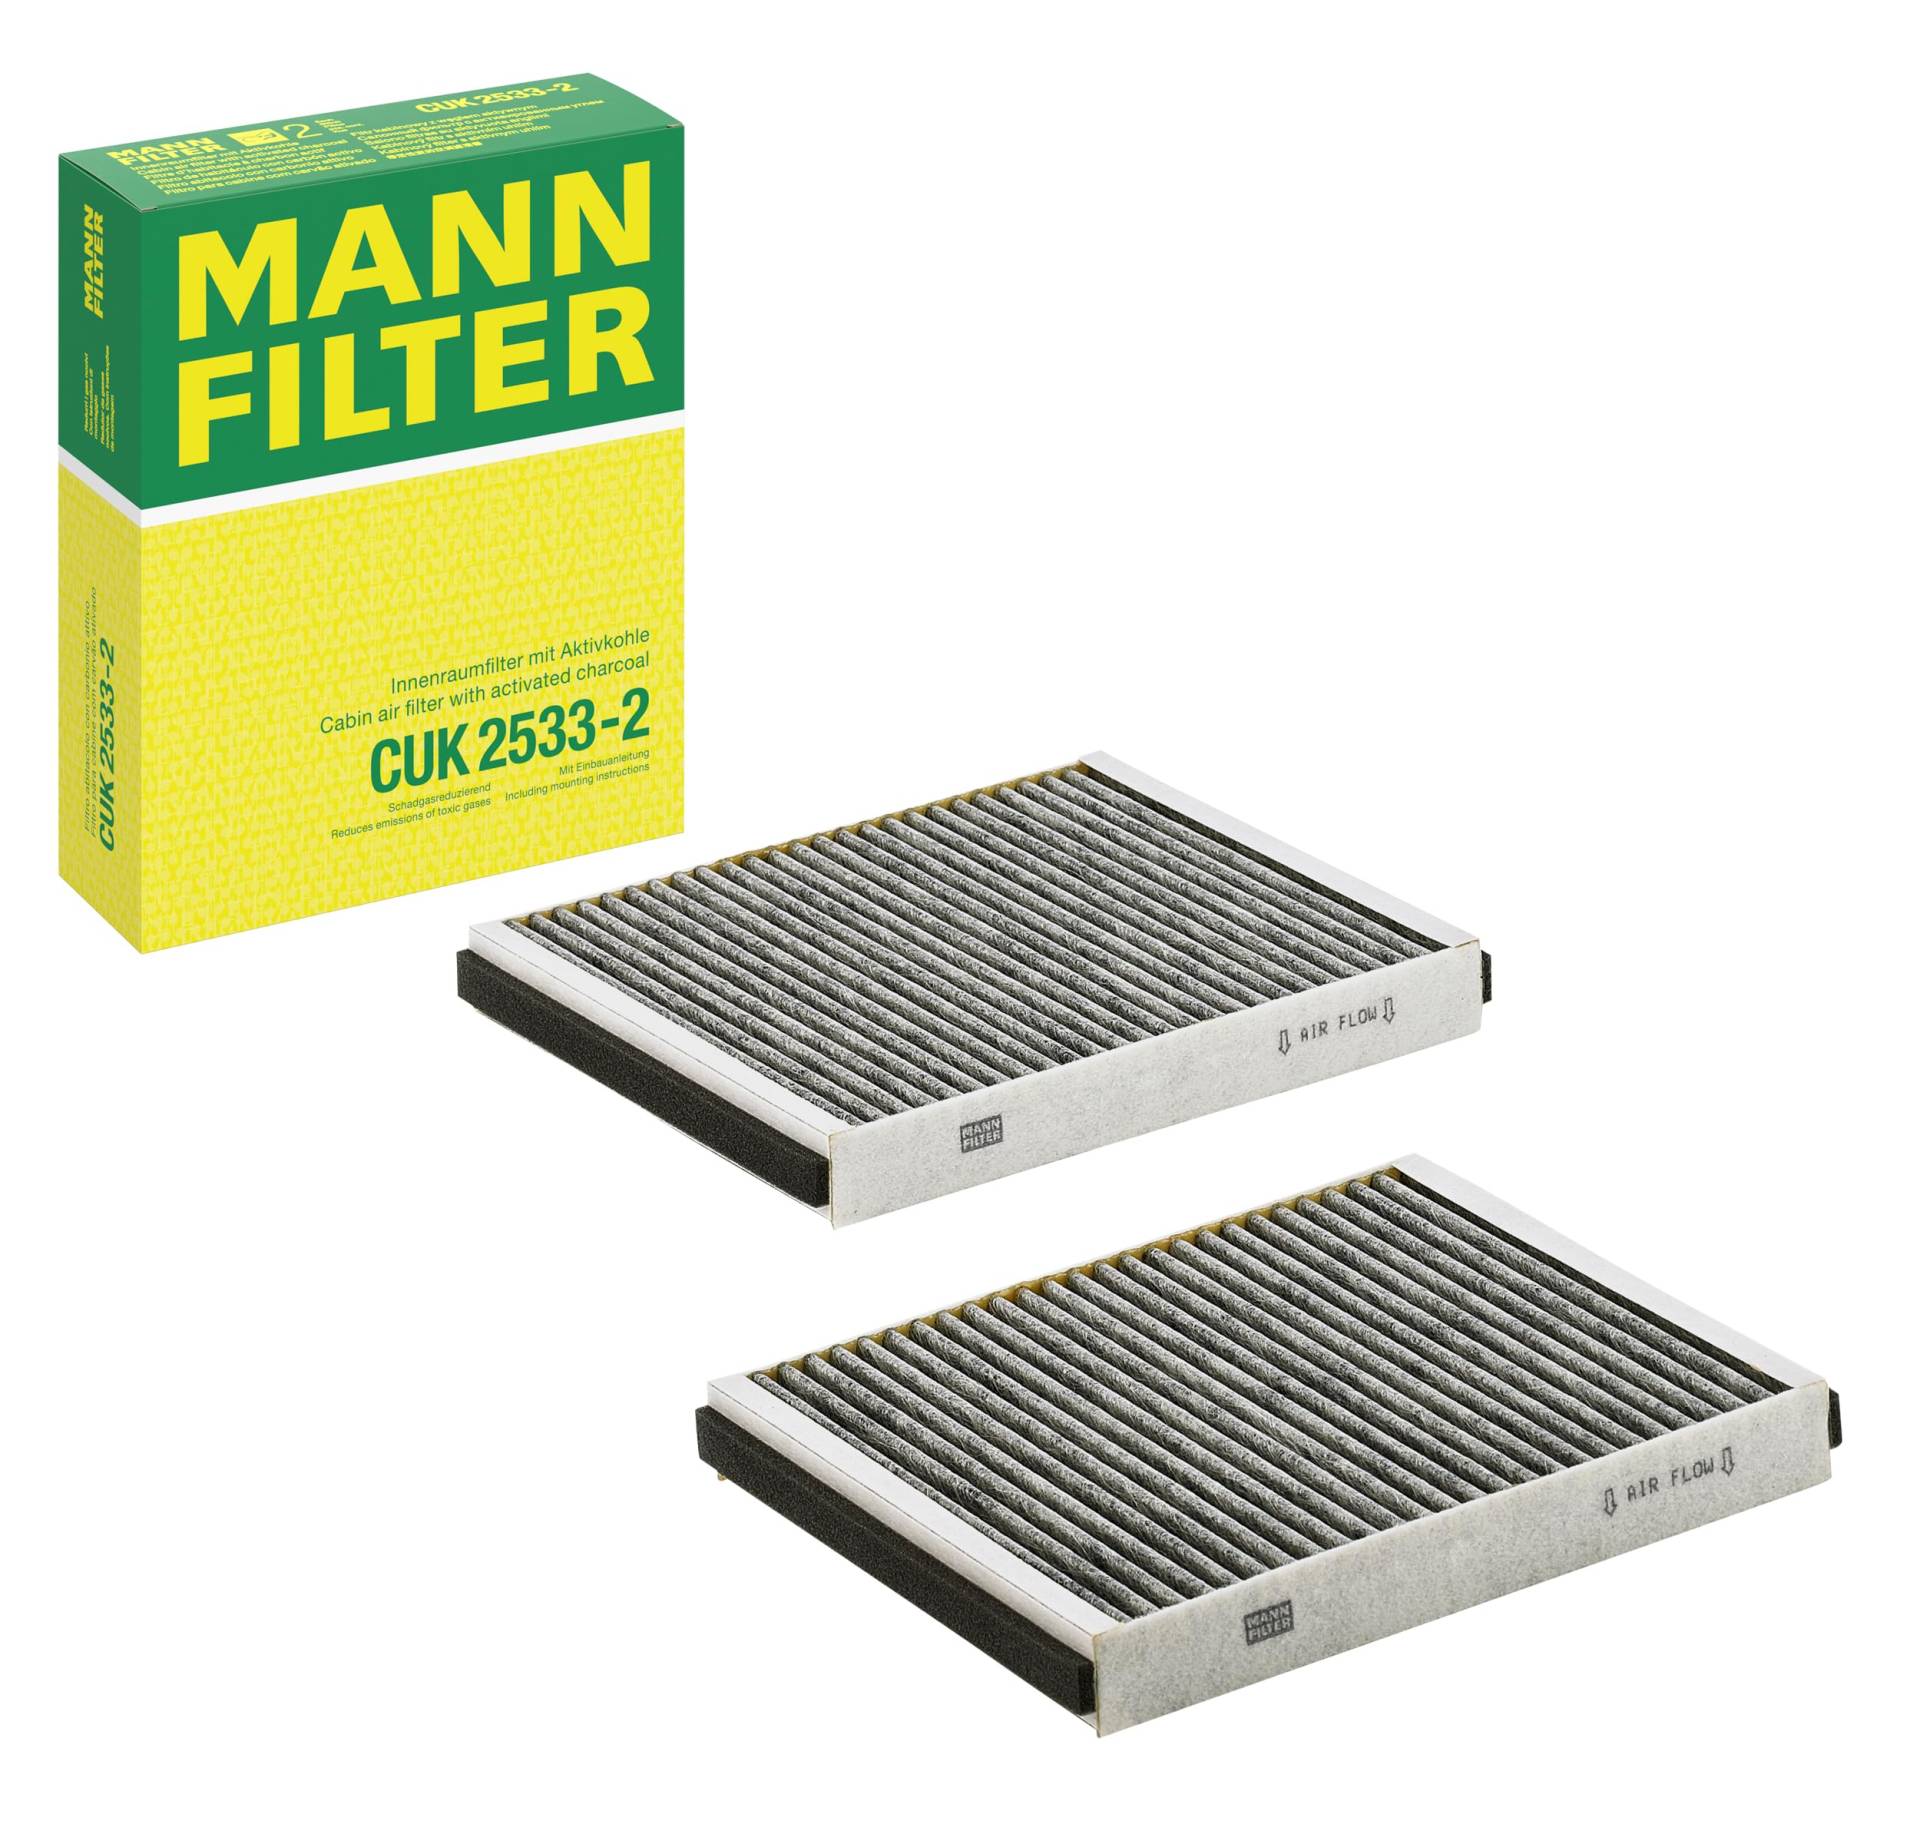 MANN-FILTER CUK 2533-2 Innenraumfilter – Kabinenluftfilter Satz (2er Set) – Für PKW von MANN-FILTER